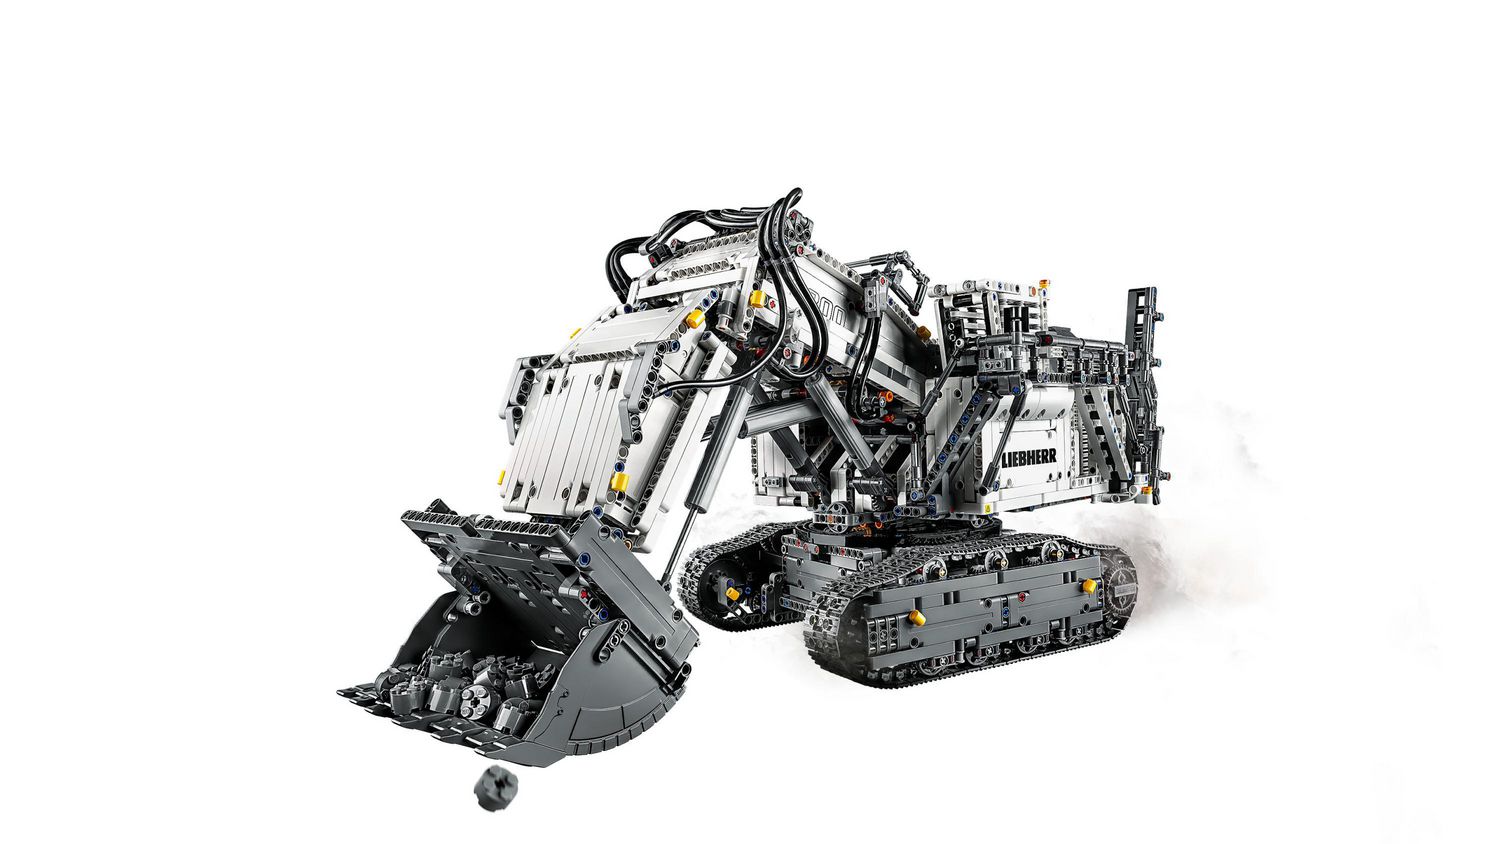 LEGO Technic Liebherr R 9800 Excavator 42100 Toy Building Kit